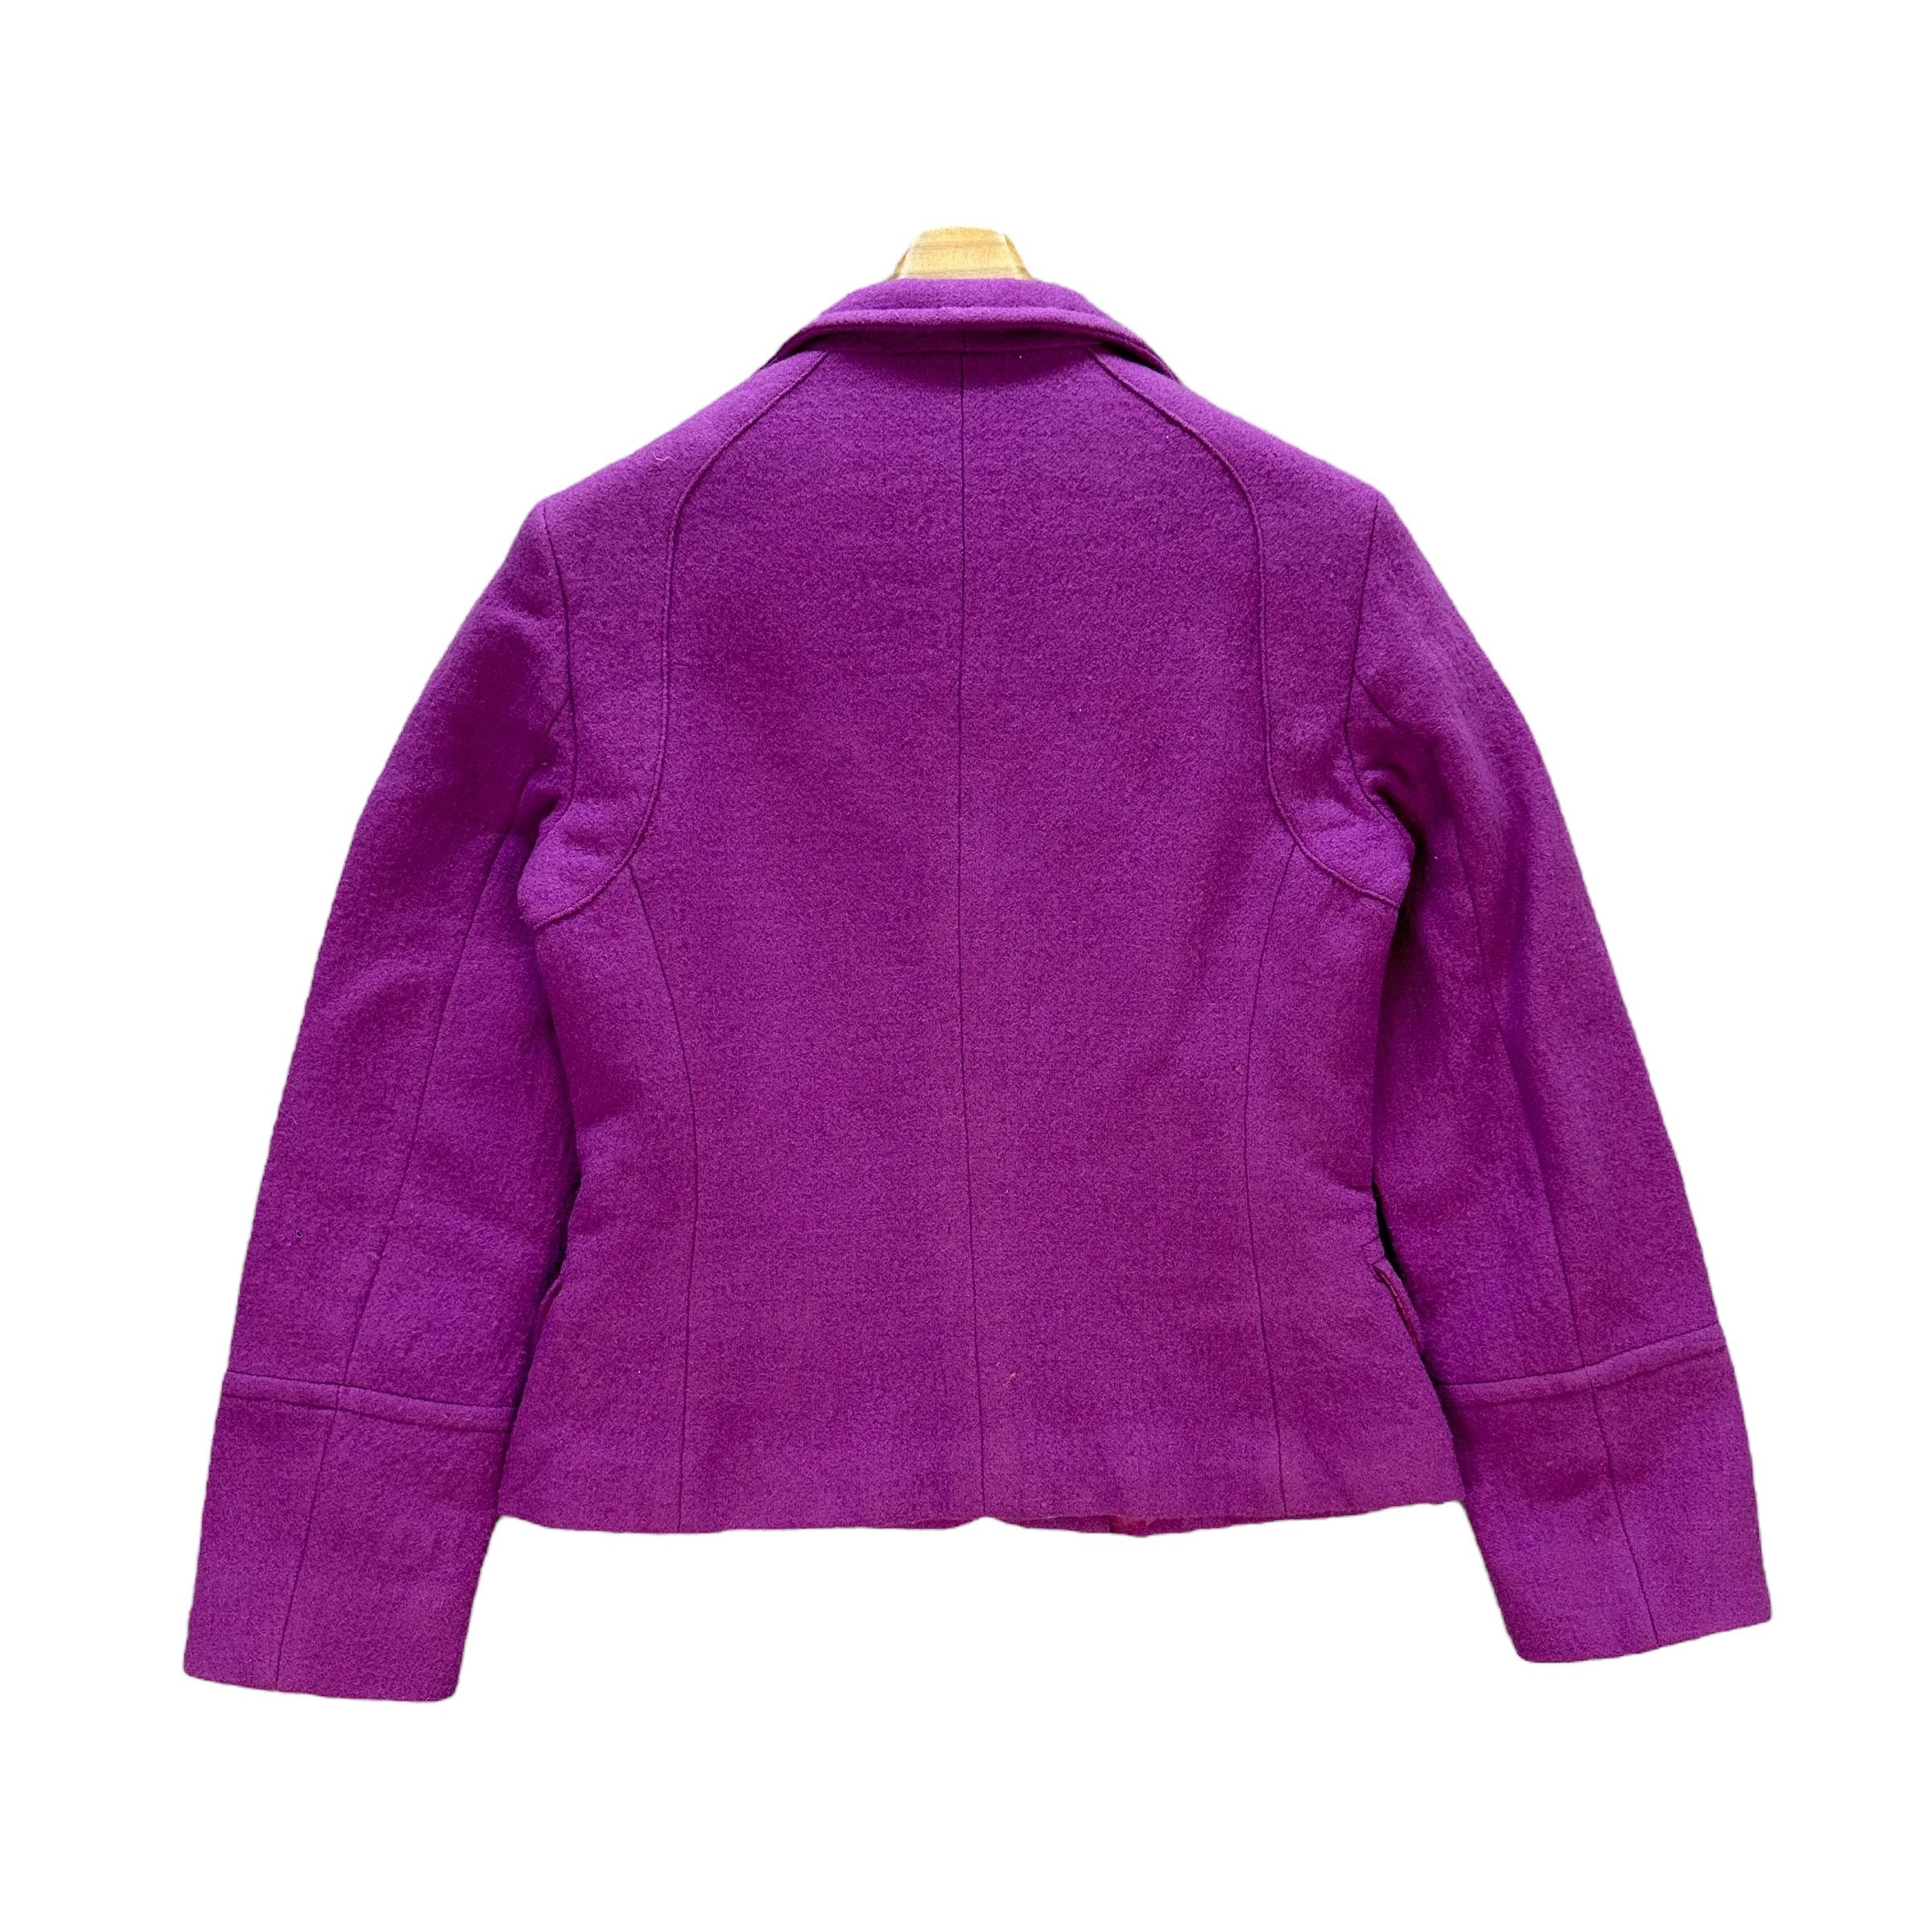 Designer - Max Mara Purple Wool Double Collar Jacket #9132-60 - 10